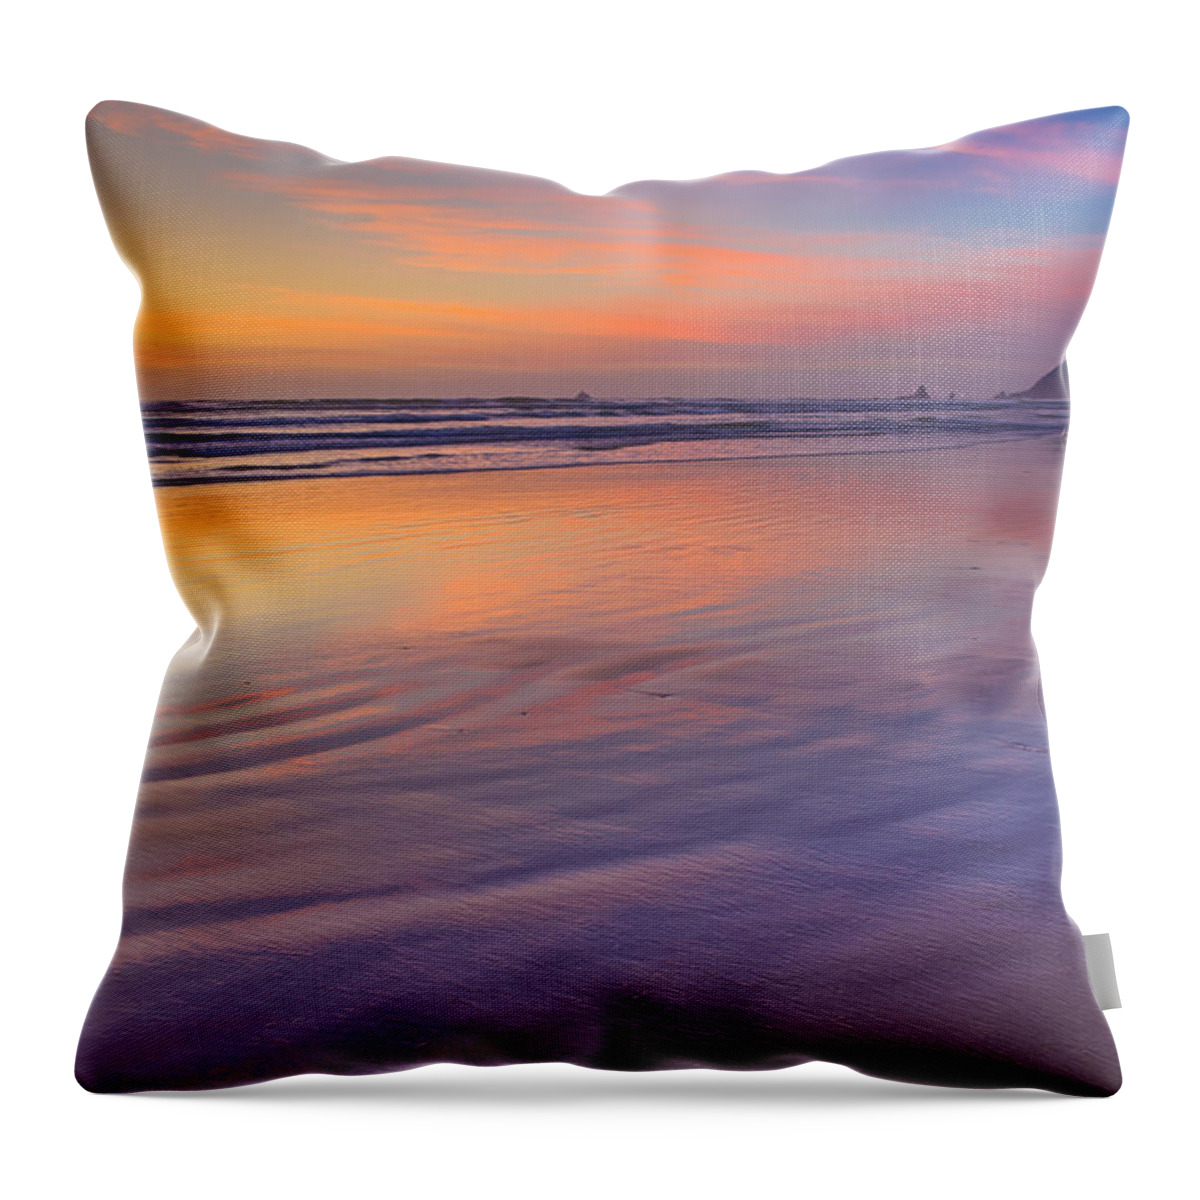 Cannon Beach Throw Pillow featuring the photograph Cannon Beach Sunset by Adam Mateo Fierro